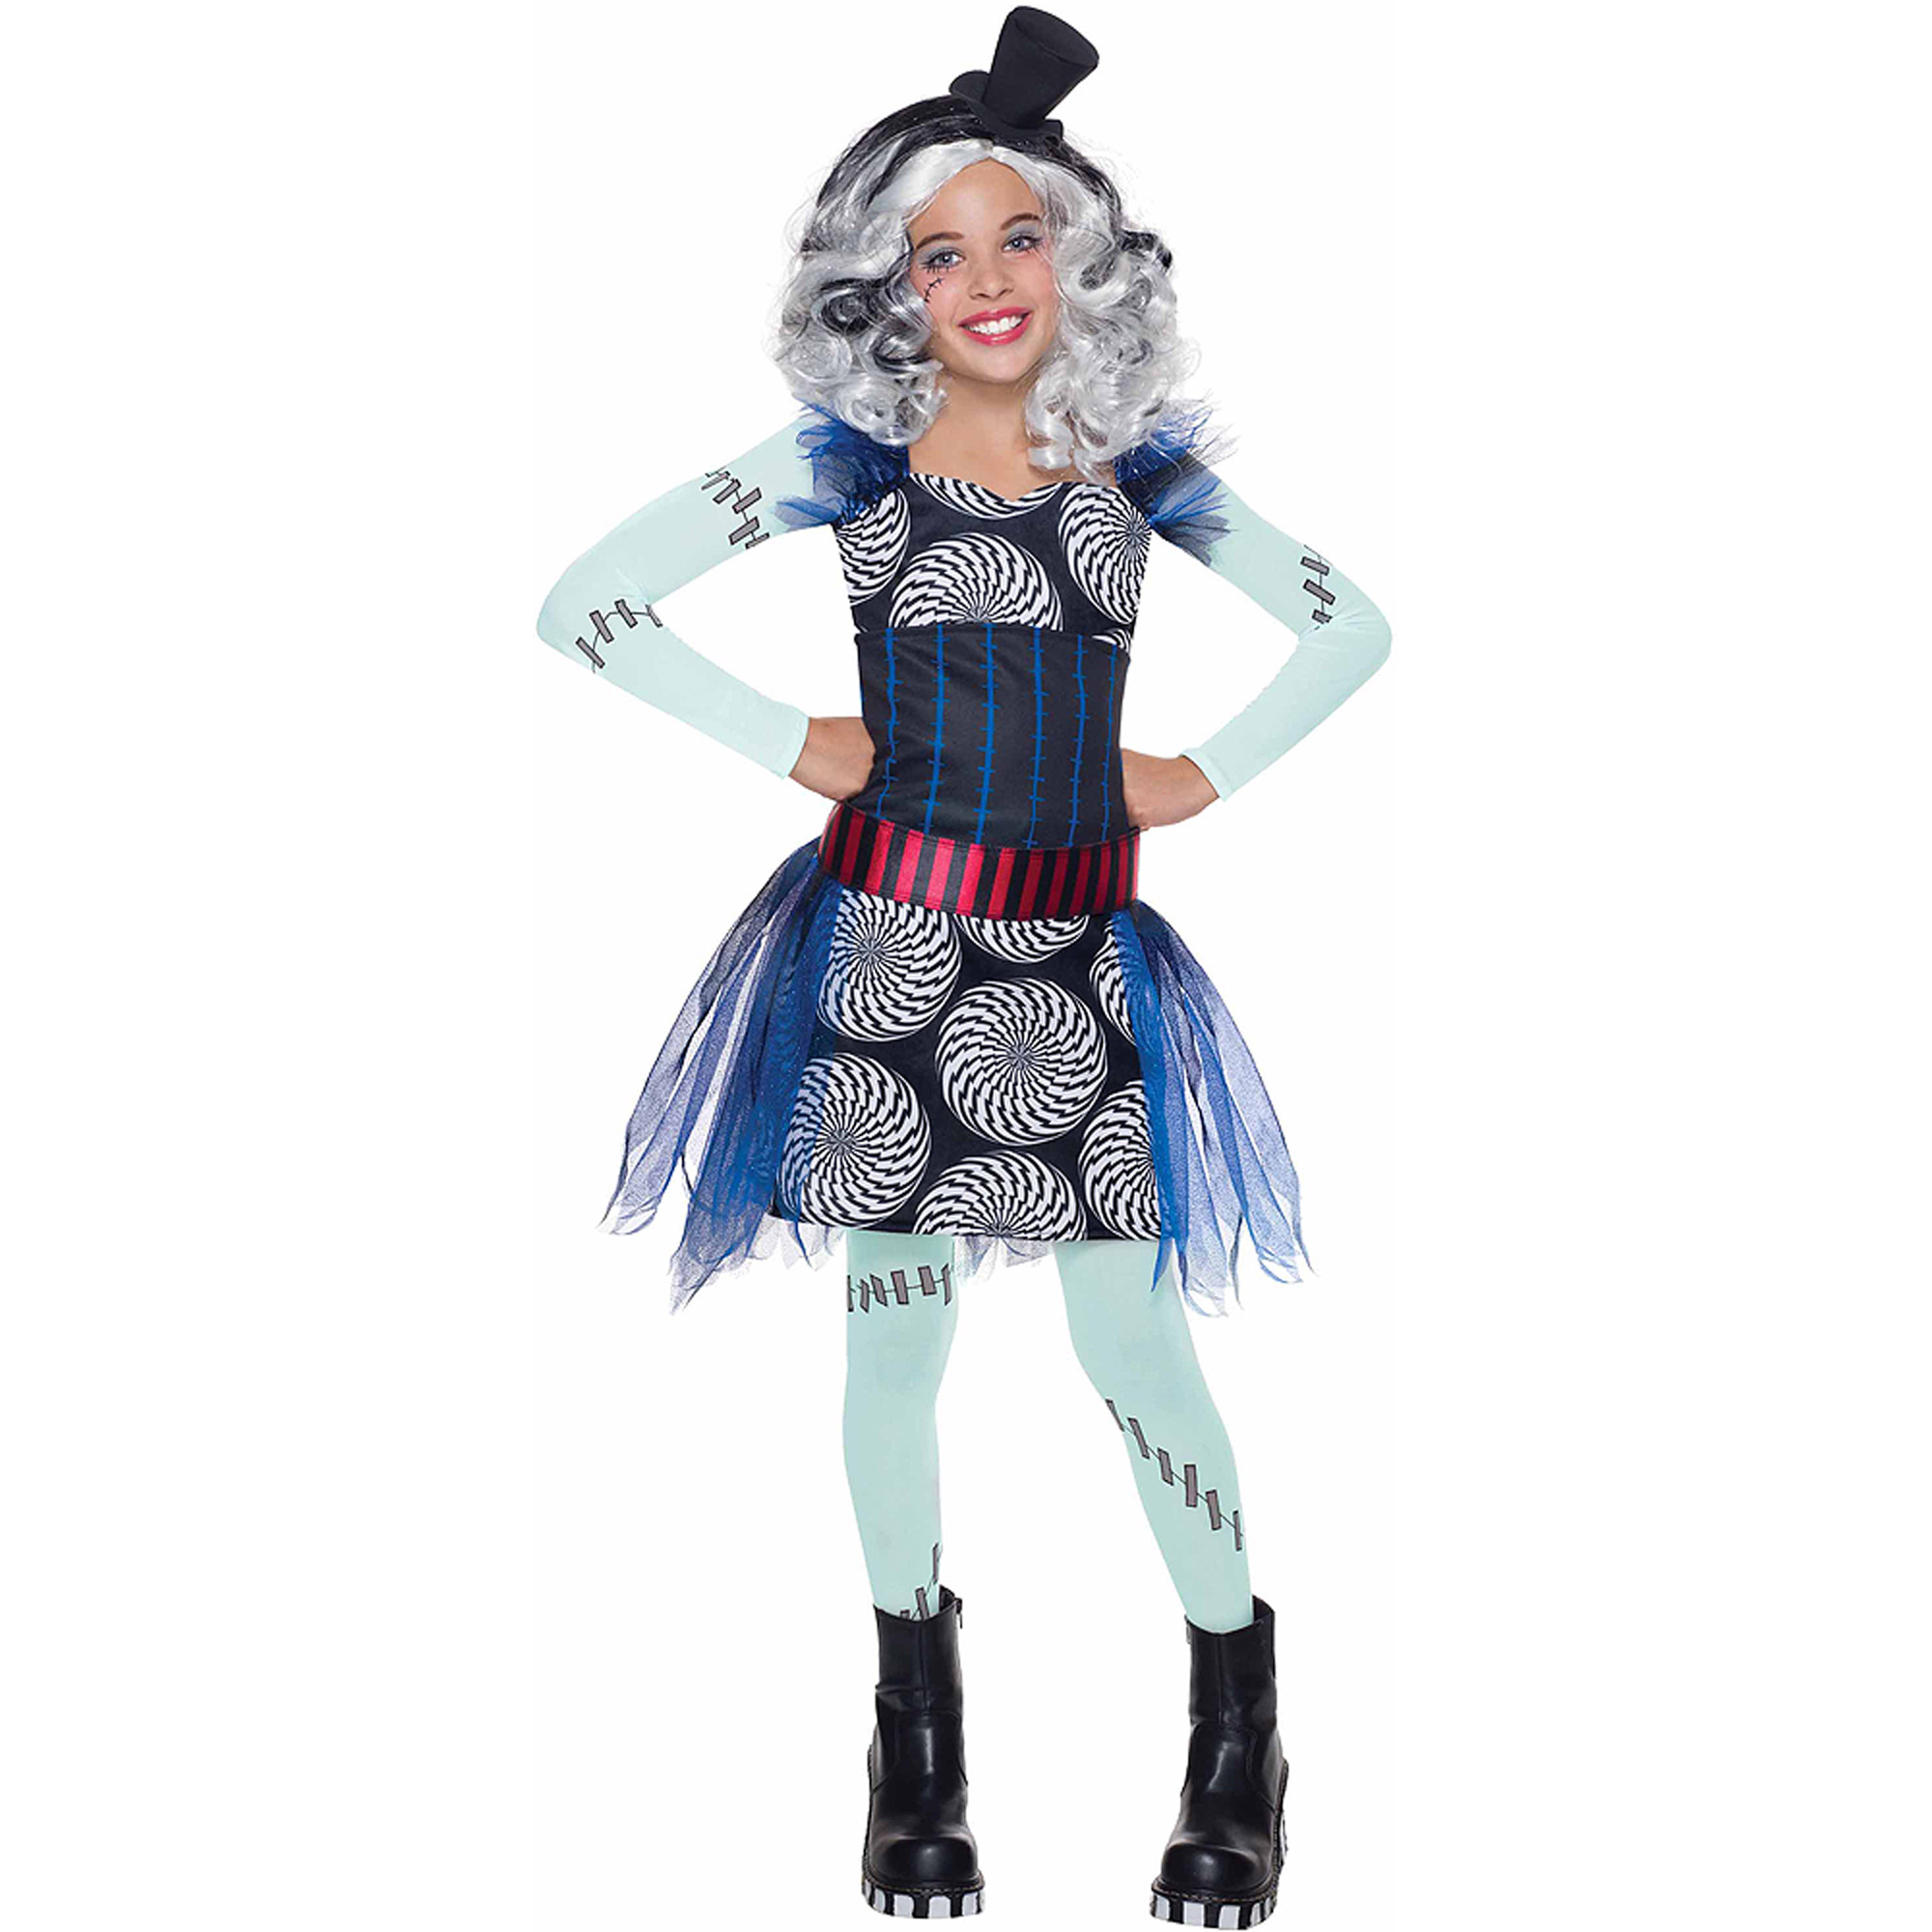 Frankie Stein "Freak du Chic" Child Halloween Dress Up / Role Play Costume - image 1 of 1